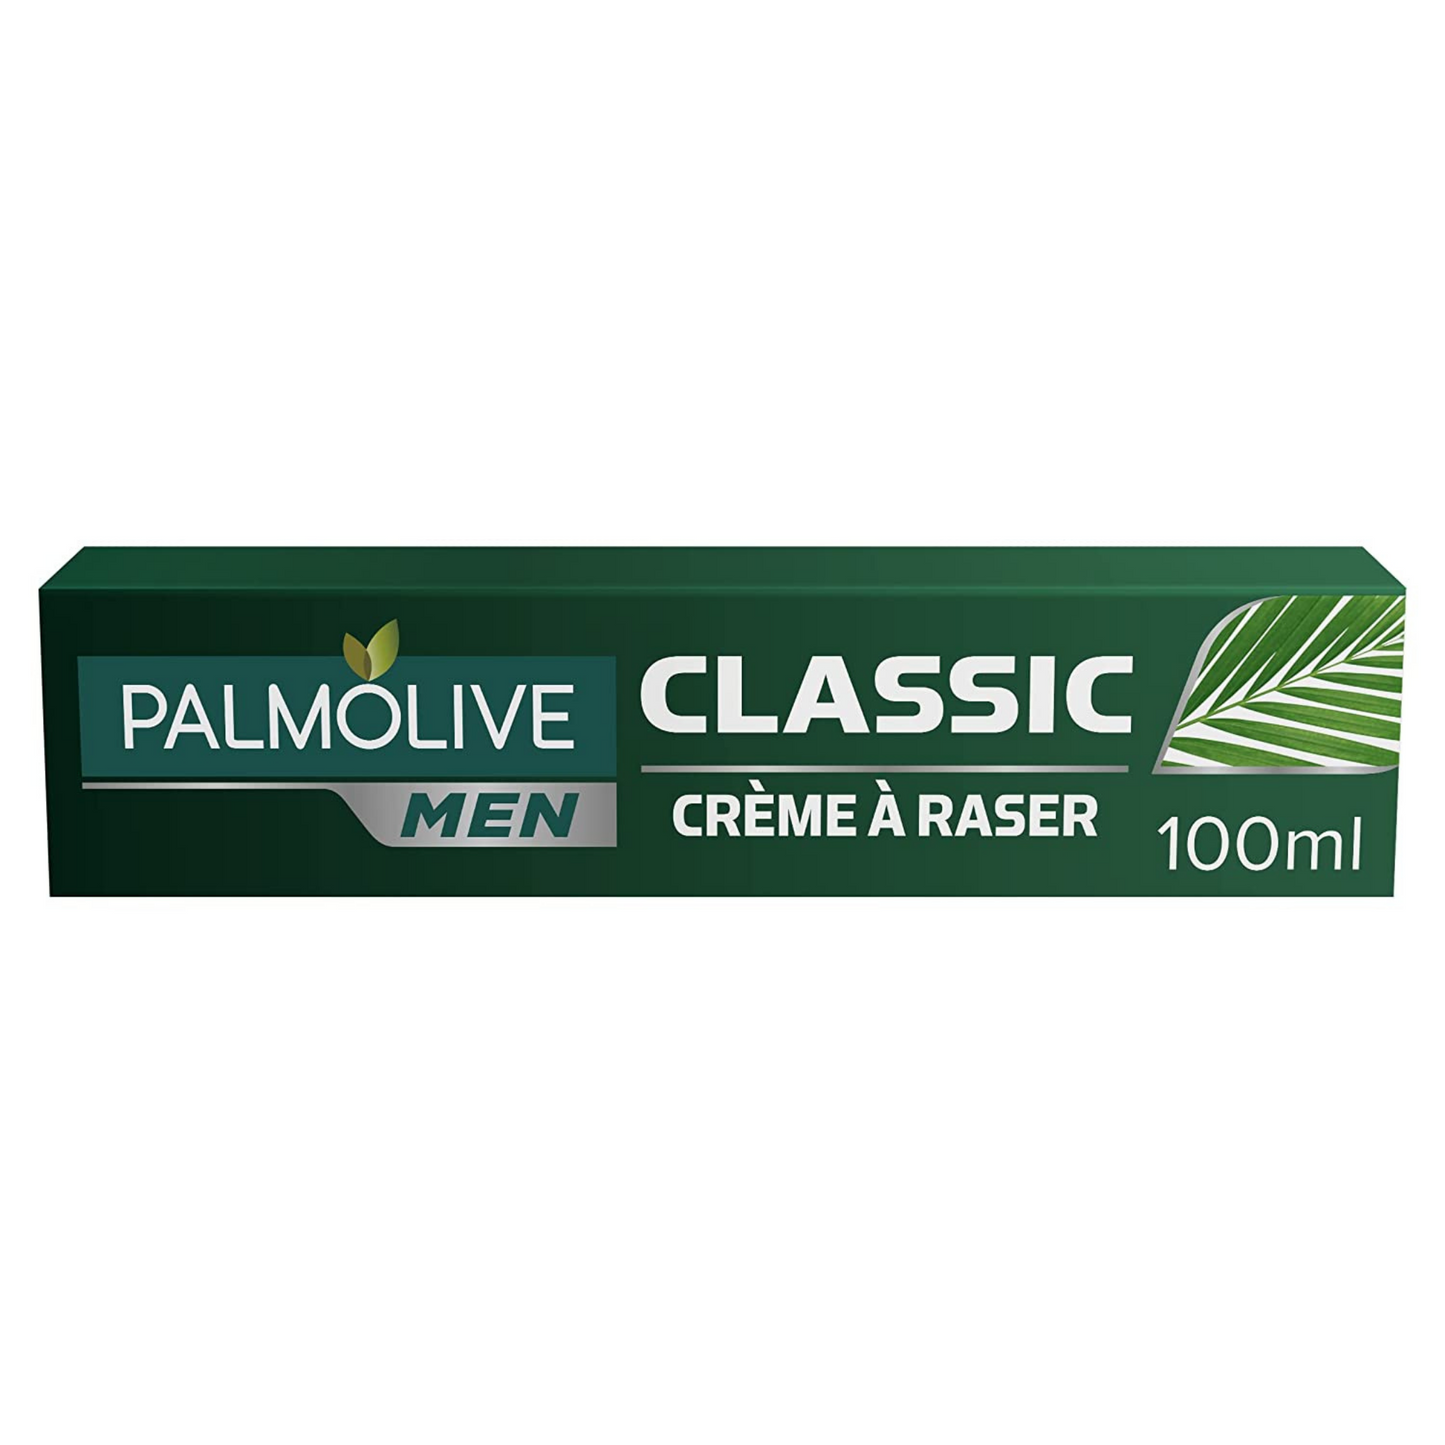 Primary Image of Palmolive Classic Shaving Cream 100ml